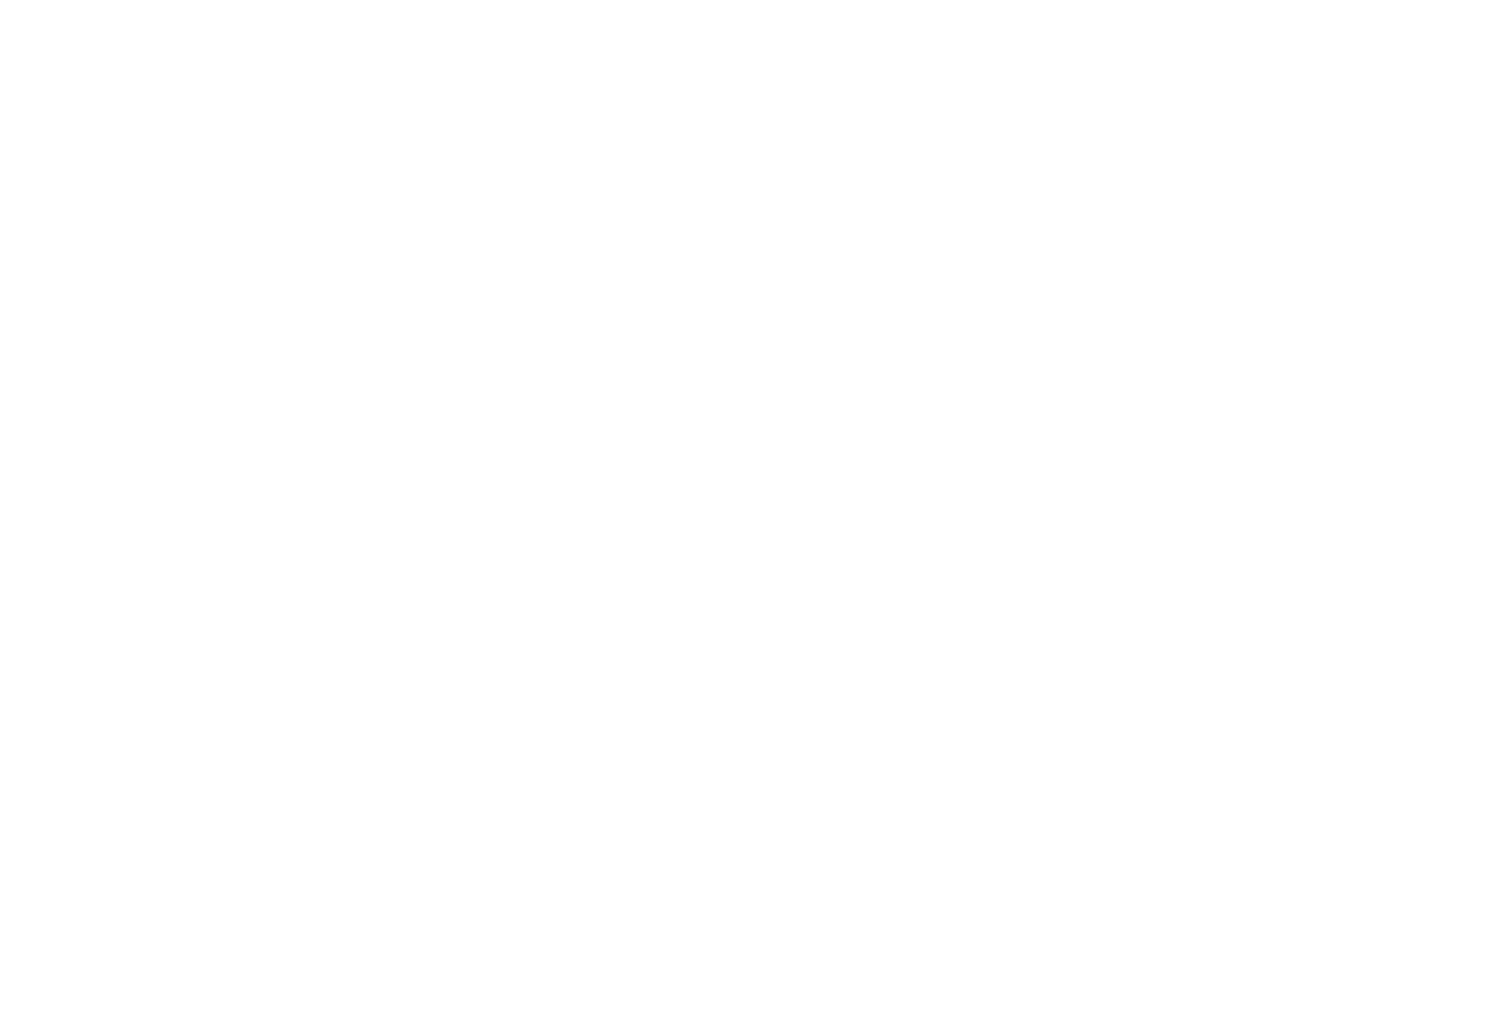 City of Pearl logo in white